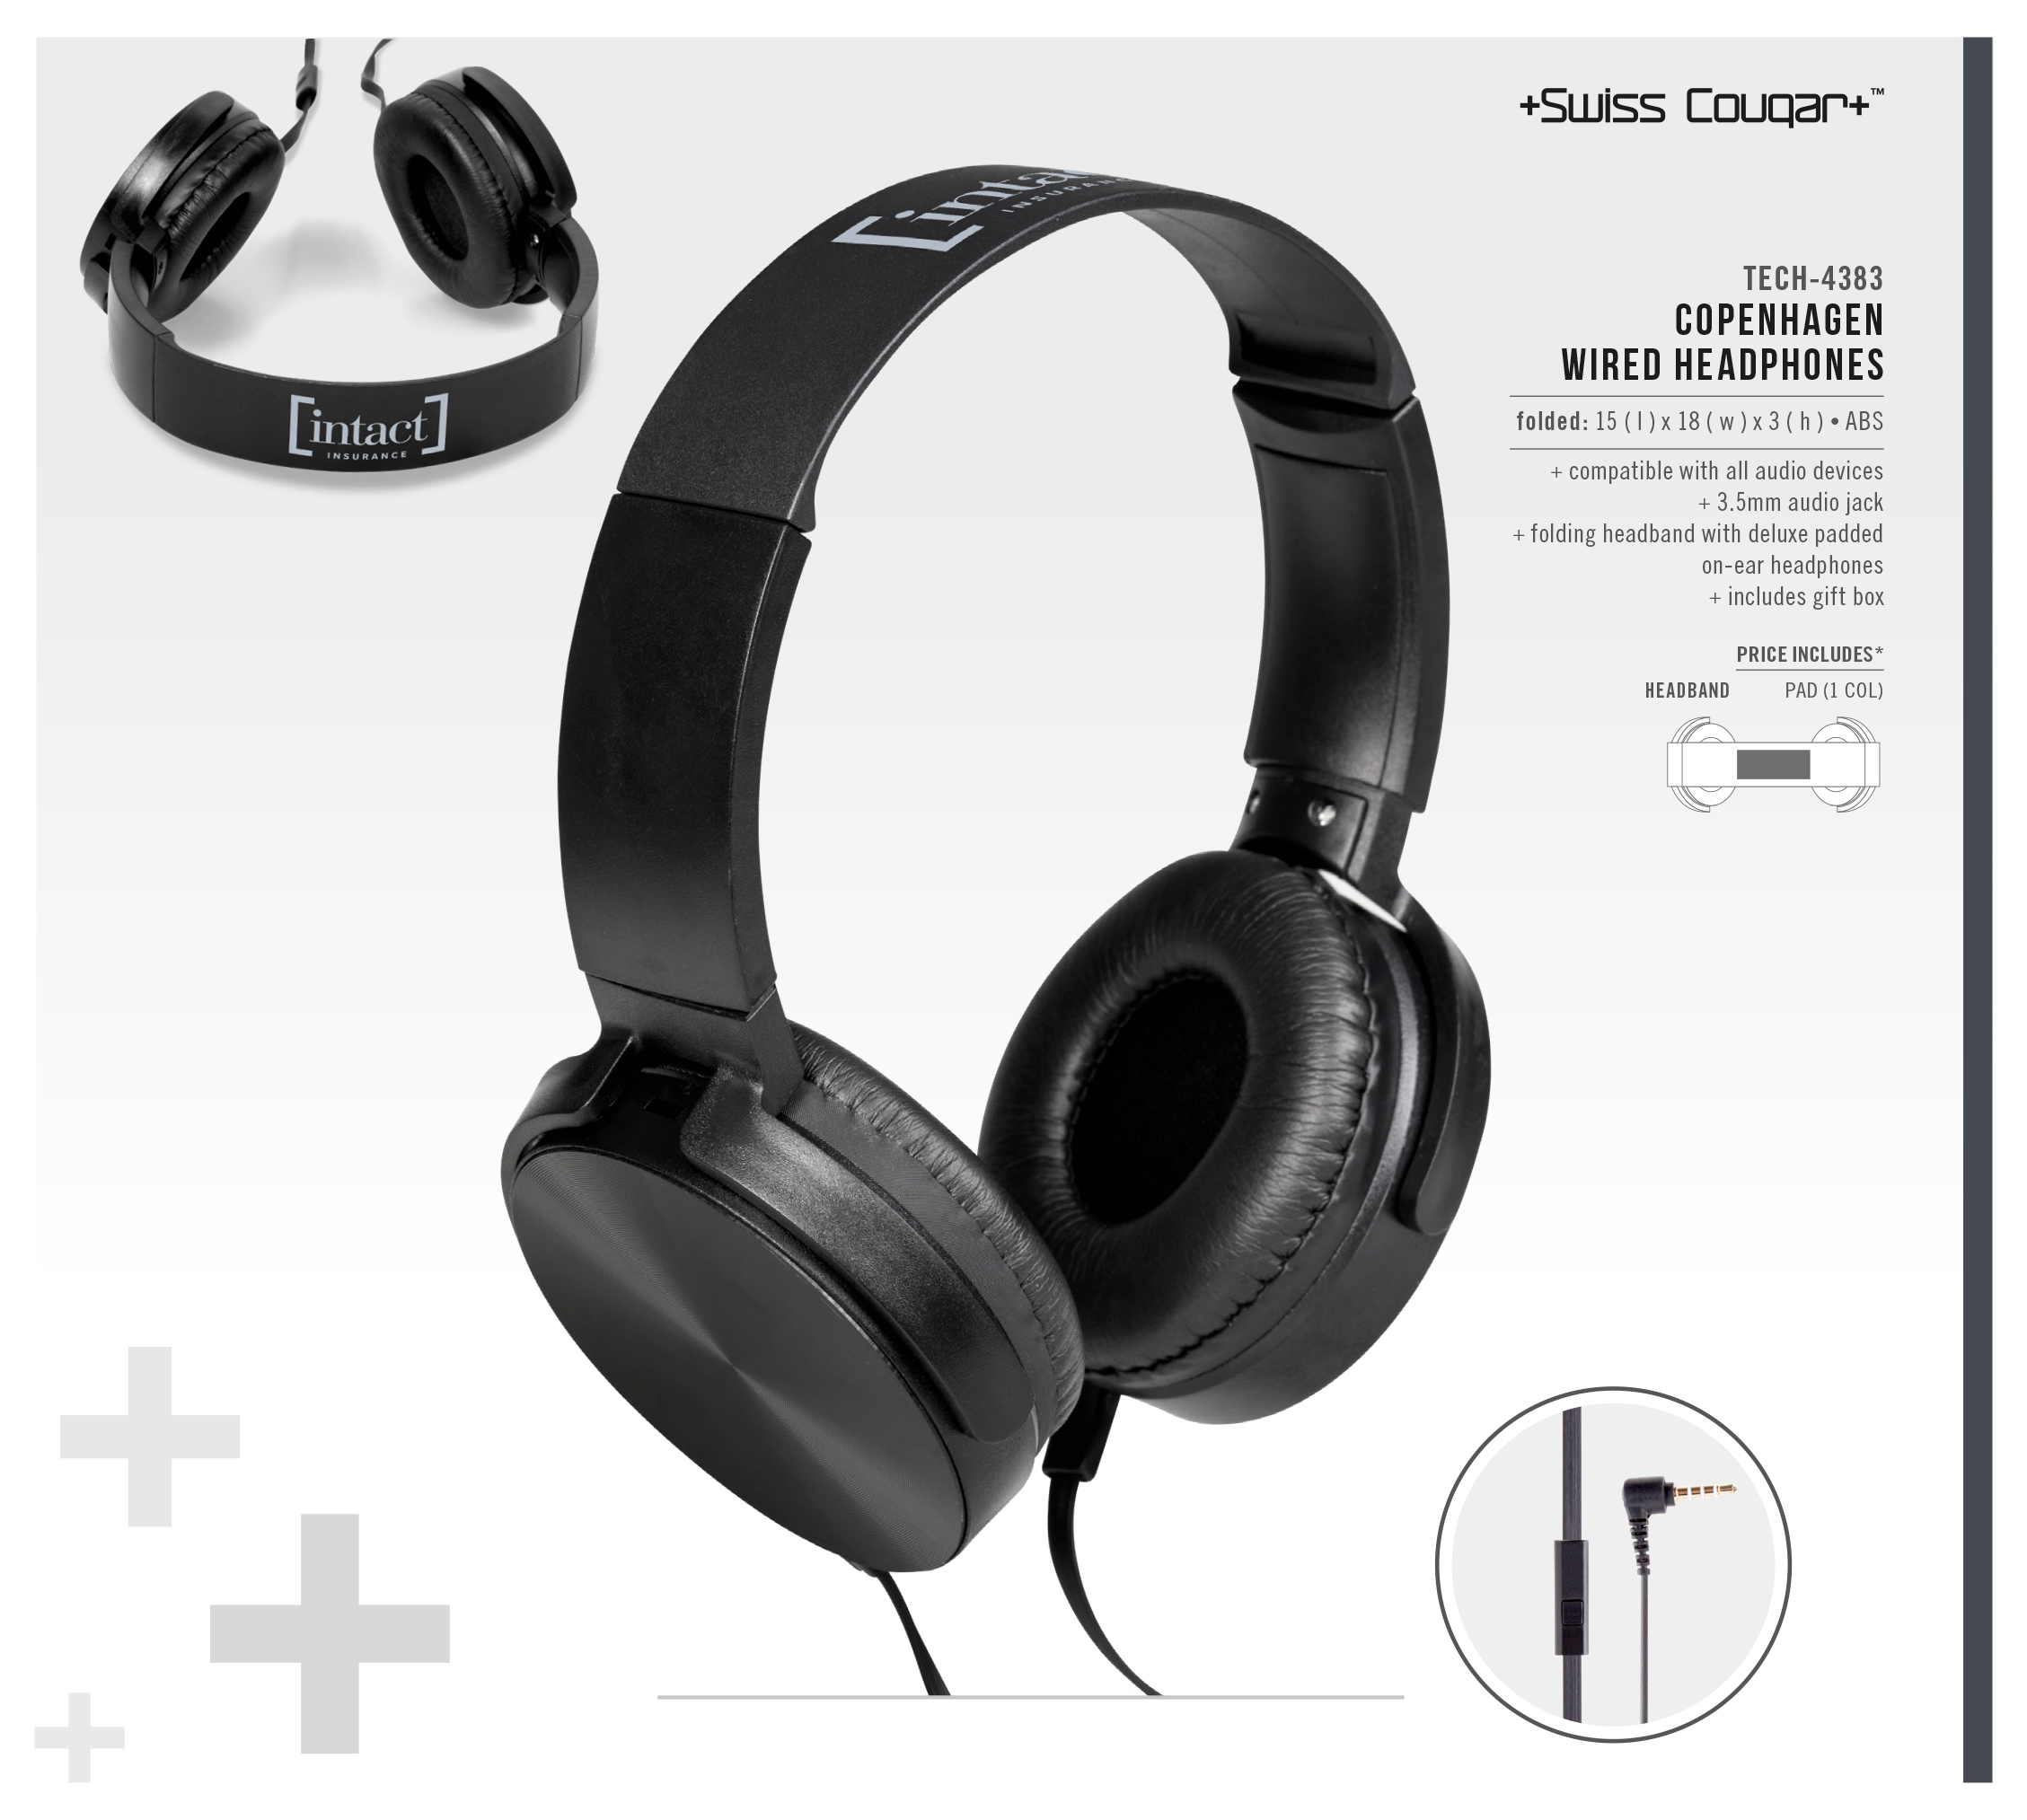 TECH-4383 - Swiss Cougar Copenhagen Wired Headphones - Catalogue Image